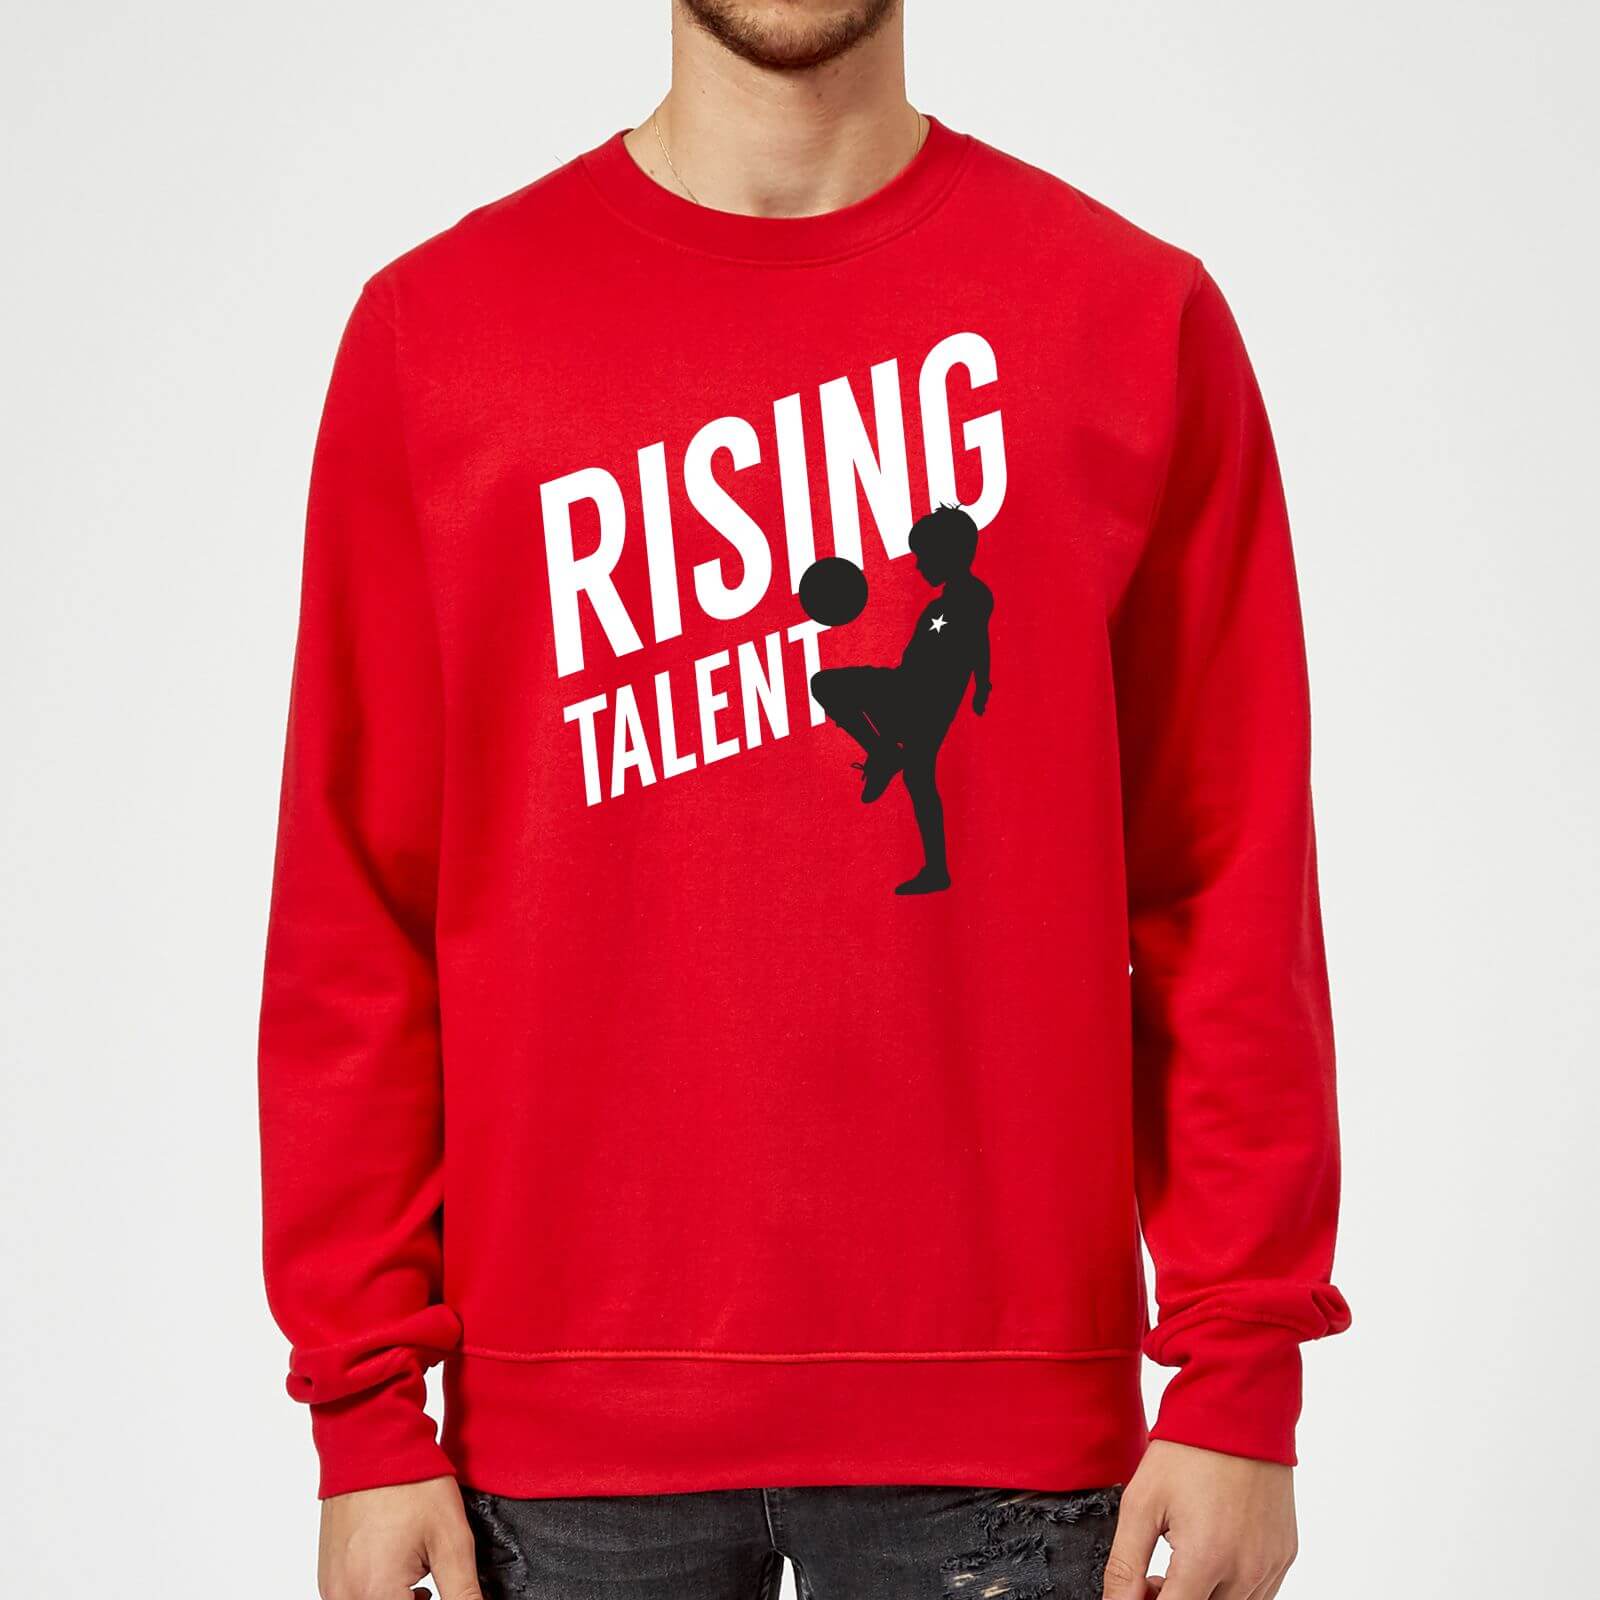 Rising Talent Sweatshirt - Red - M - Red